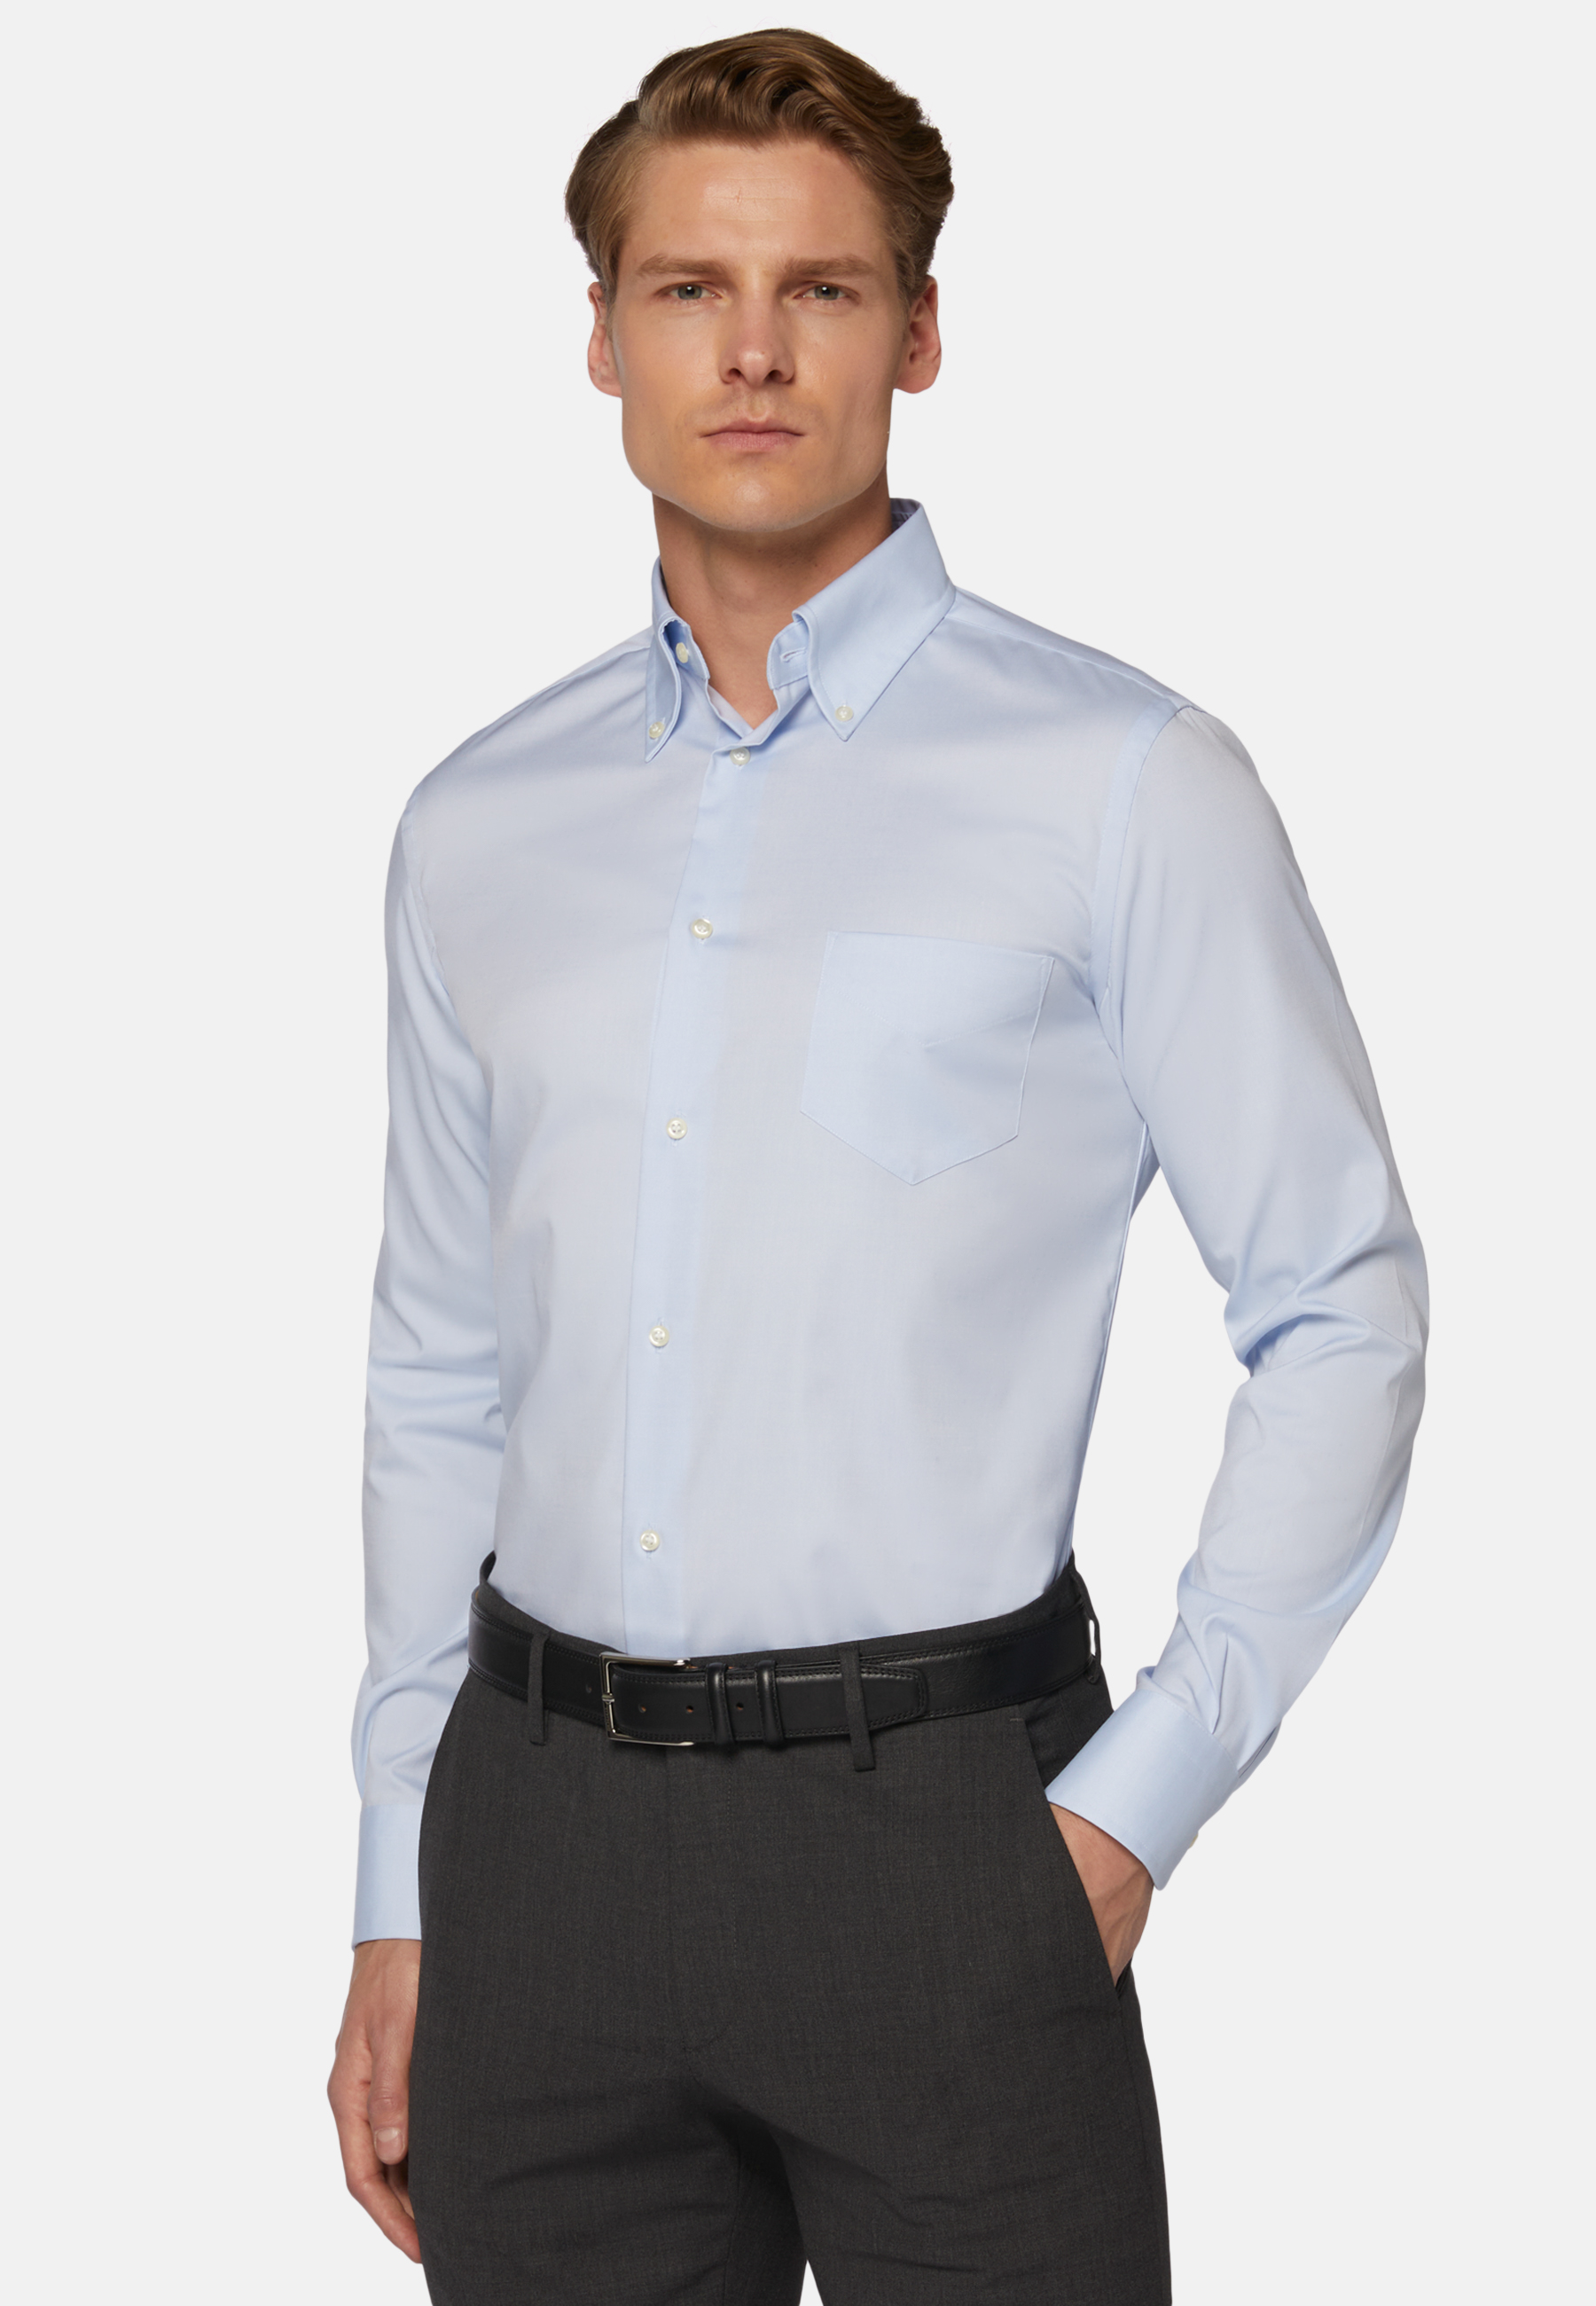 Entrelazamiento apodo mental Camisa azul en pin point de algodón regular fit Hombre | Boggi Milano